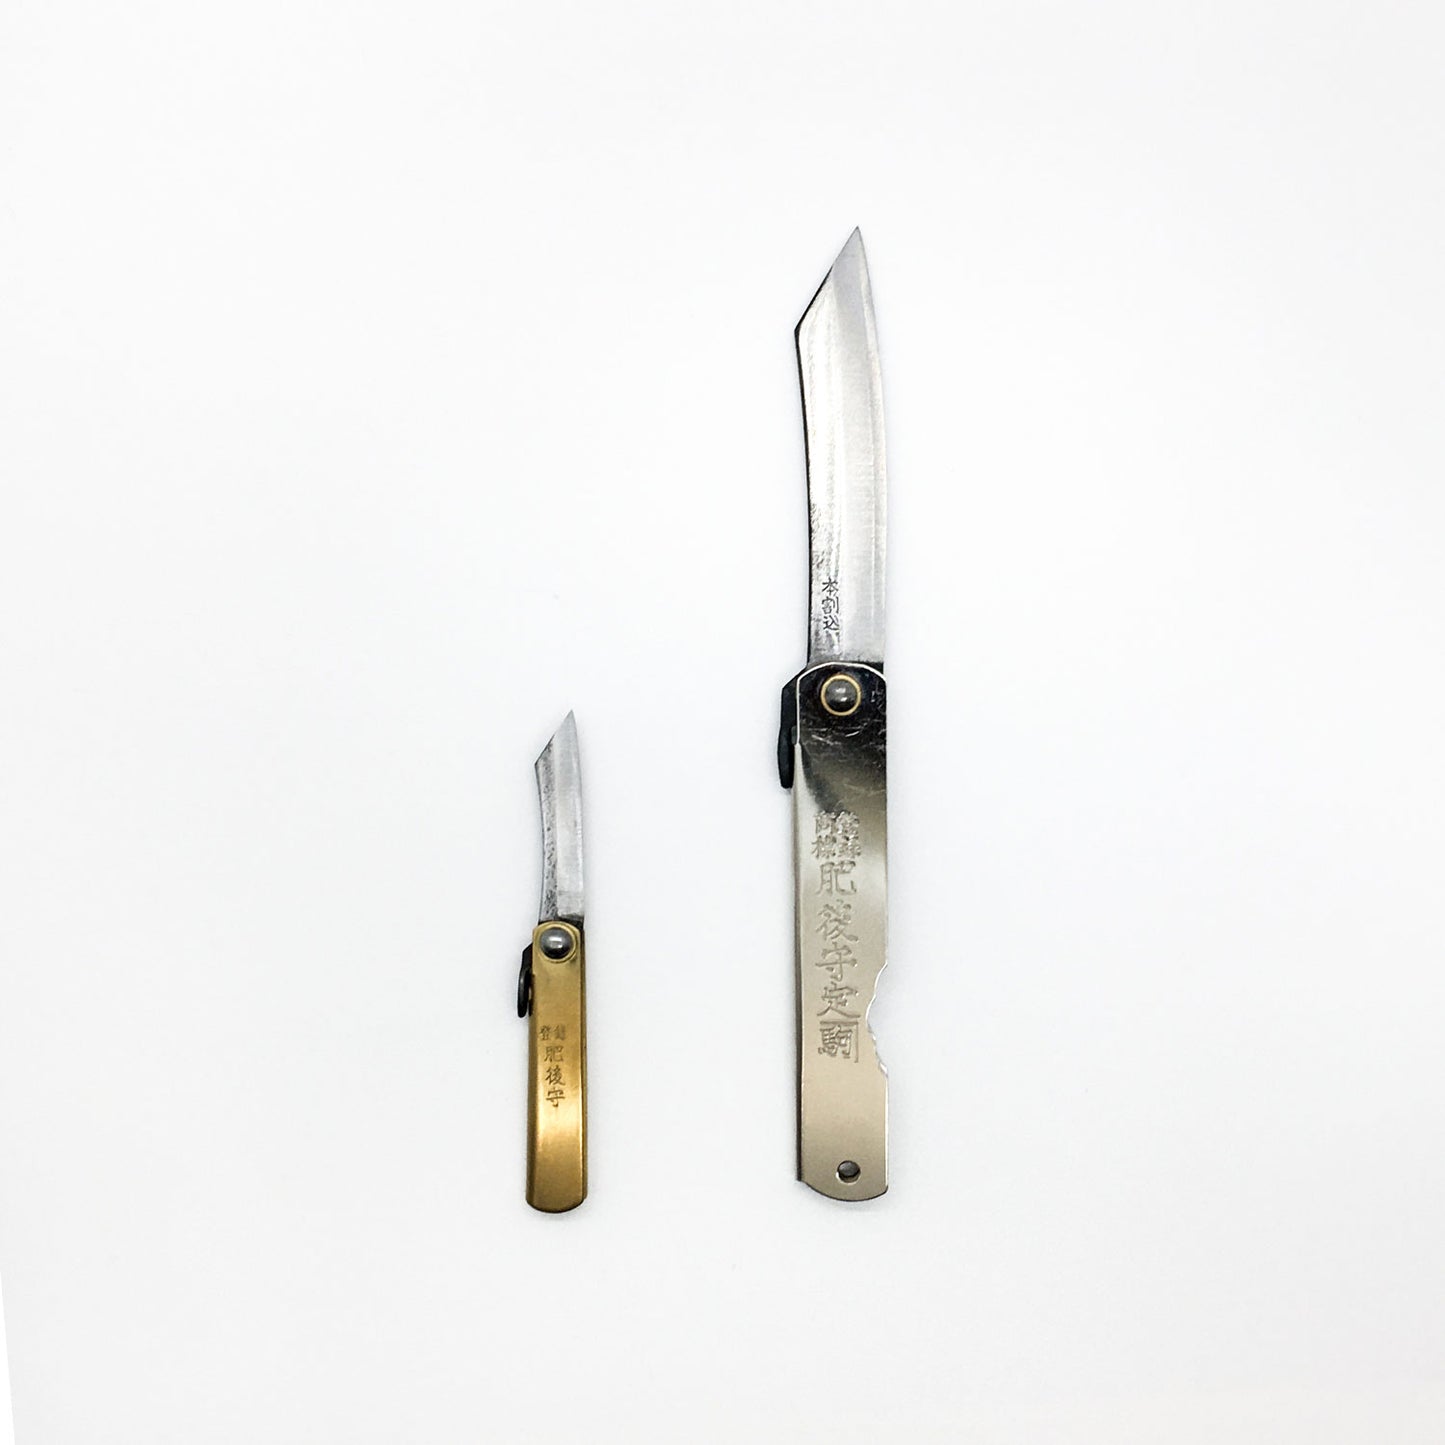 Folding Knife (HIGONOKAMI)